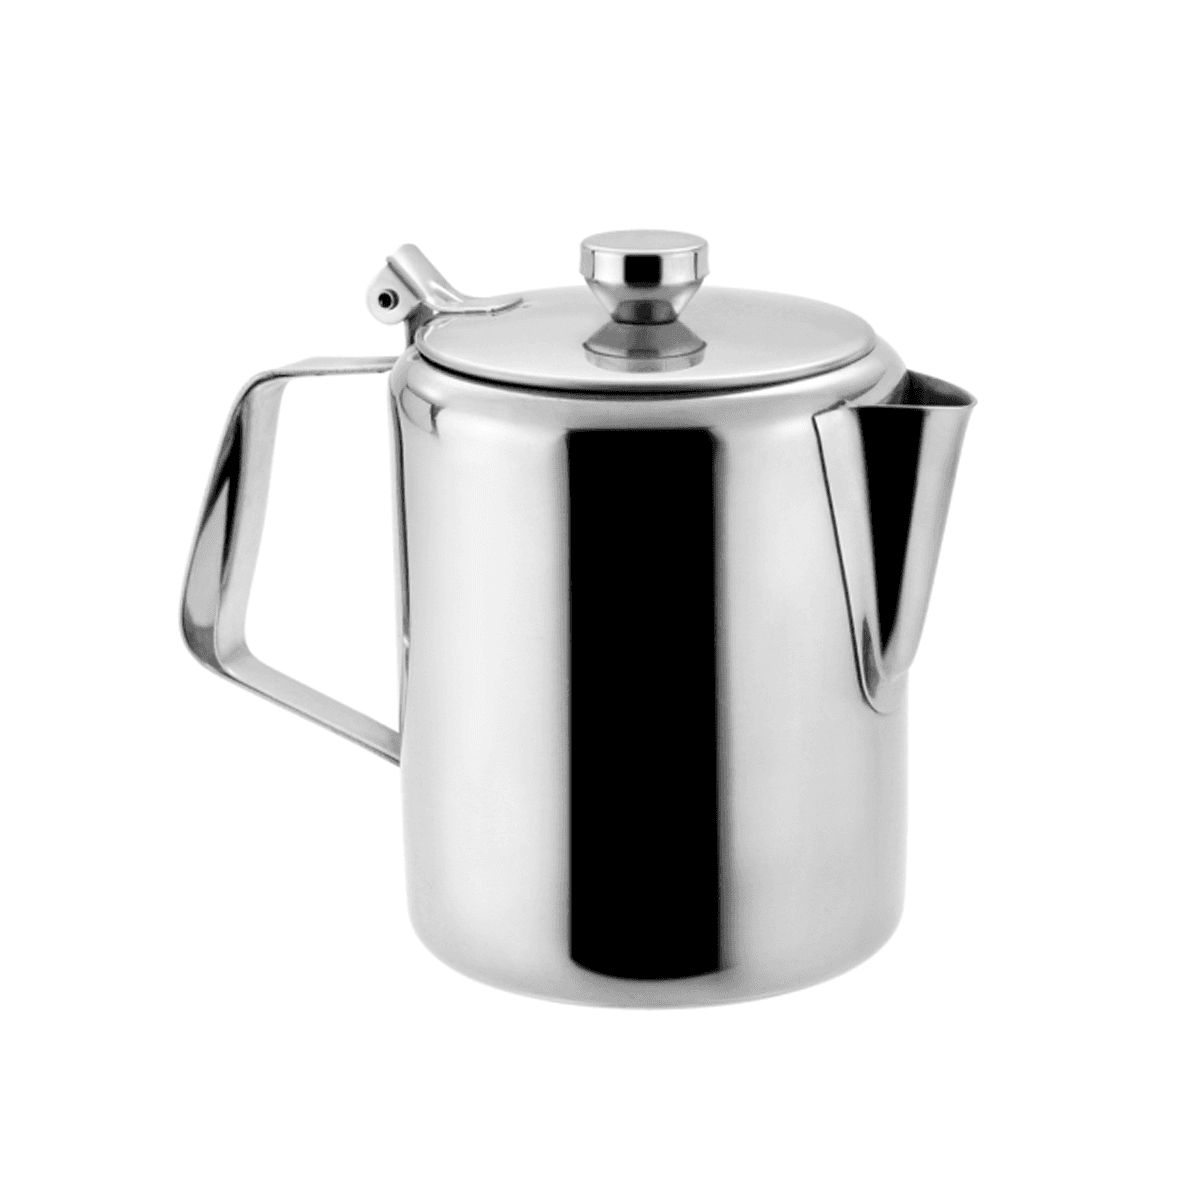 Sunnex Coffee Pot Stainless Steel 1 Liter Silver Stainless Steel